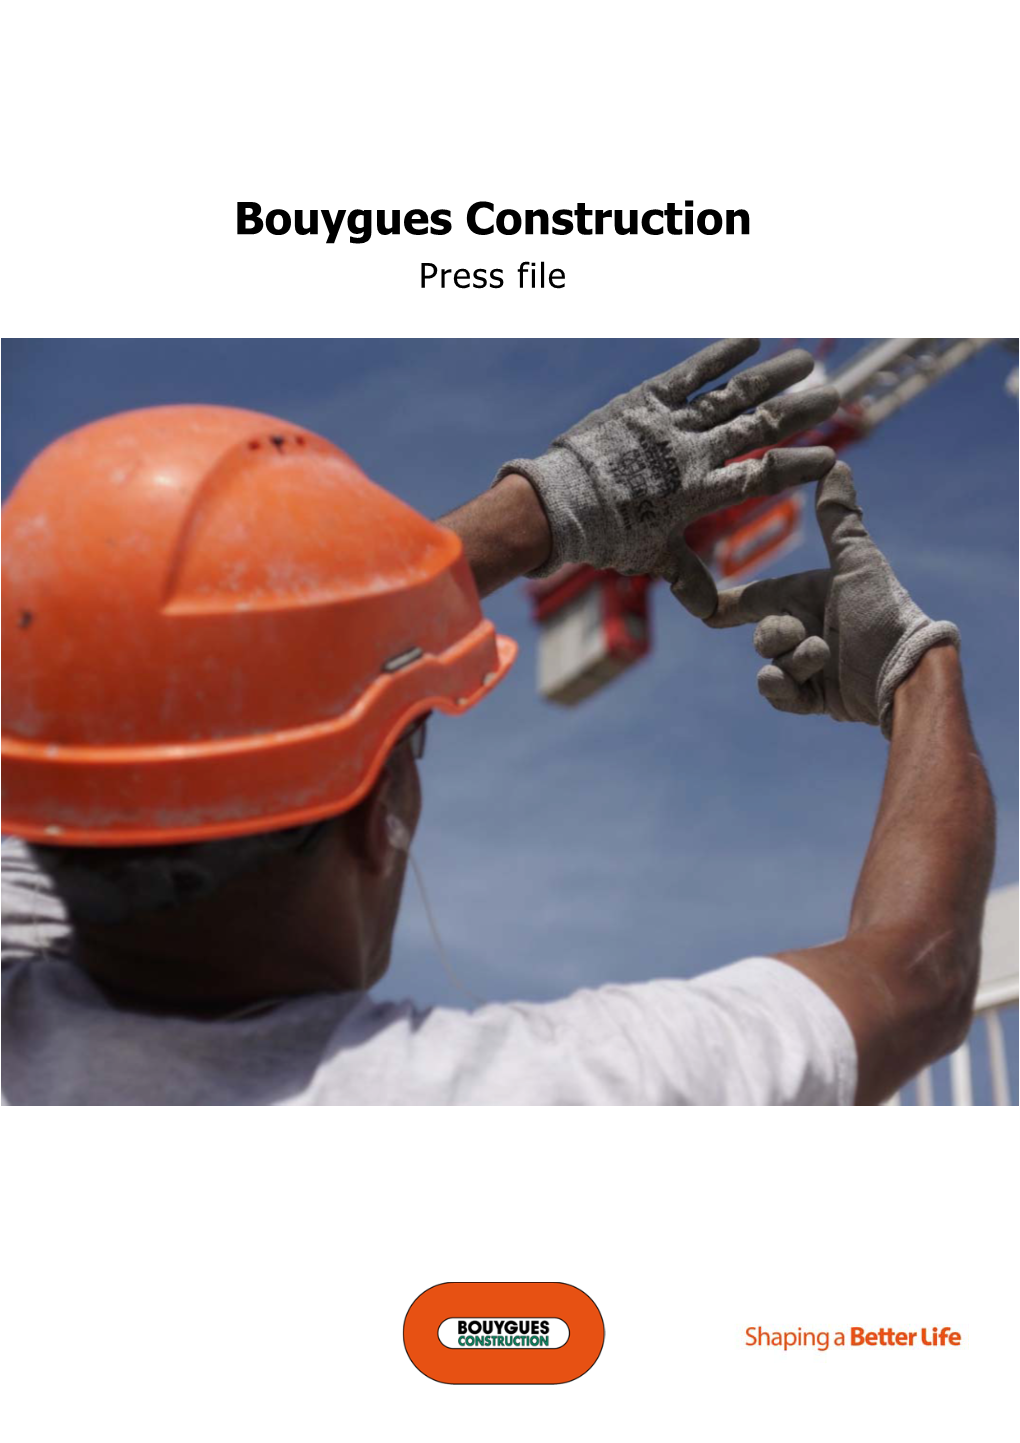 Bouygues Construction Press File